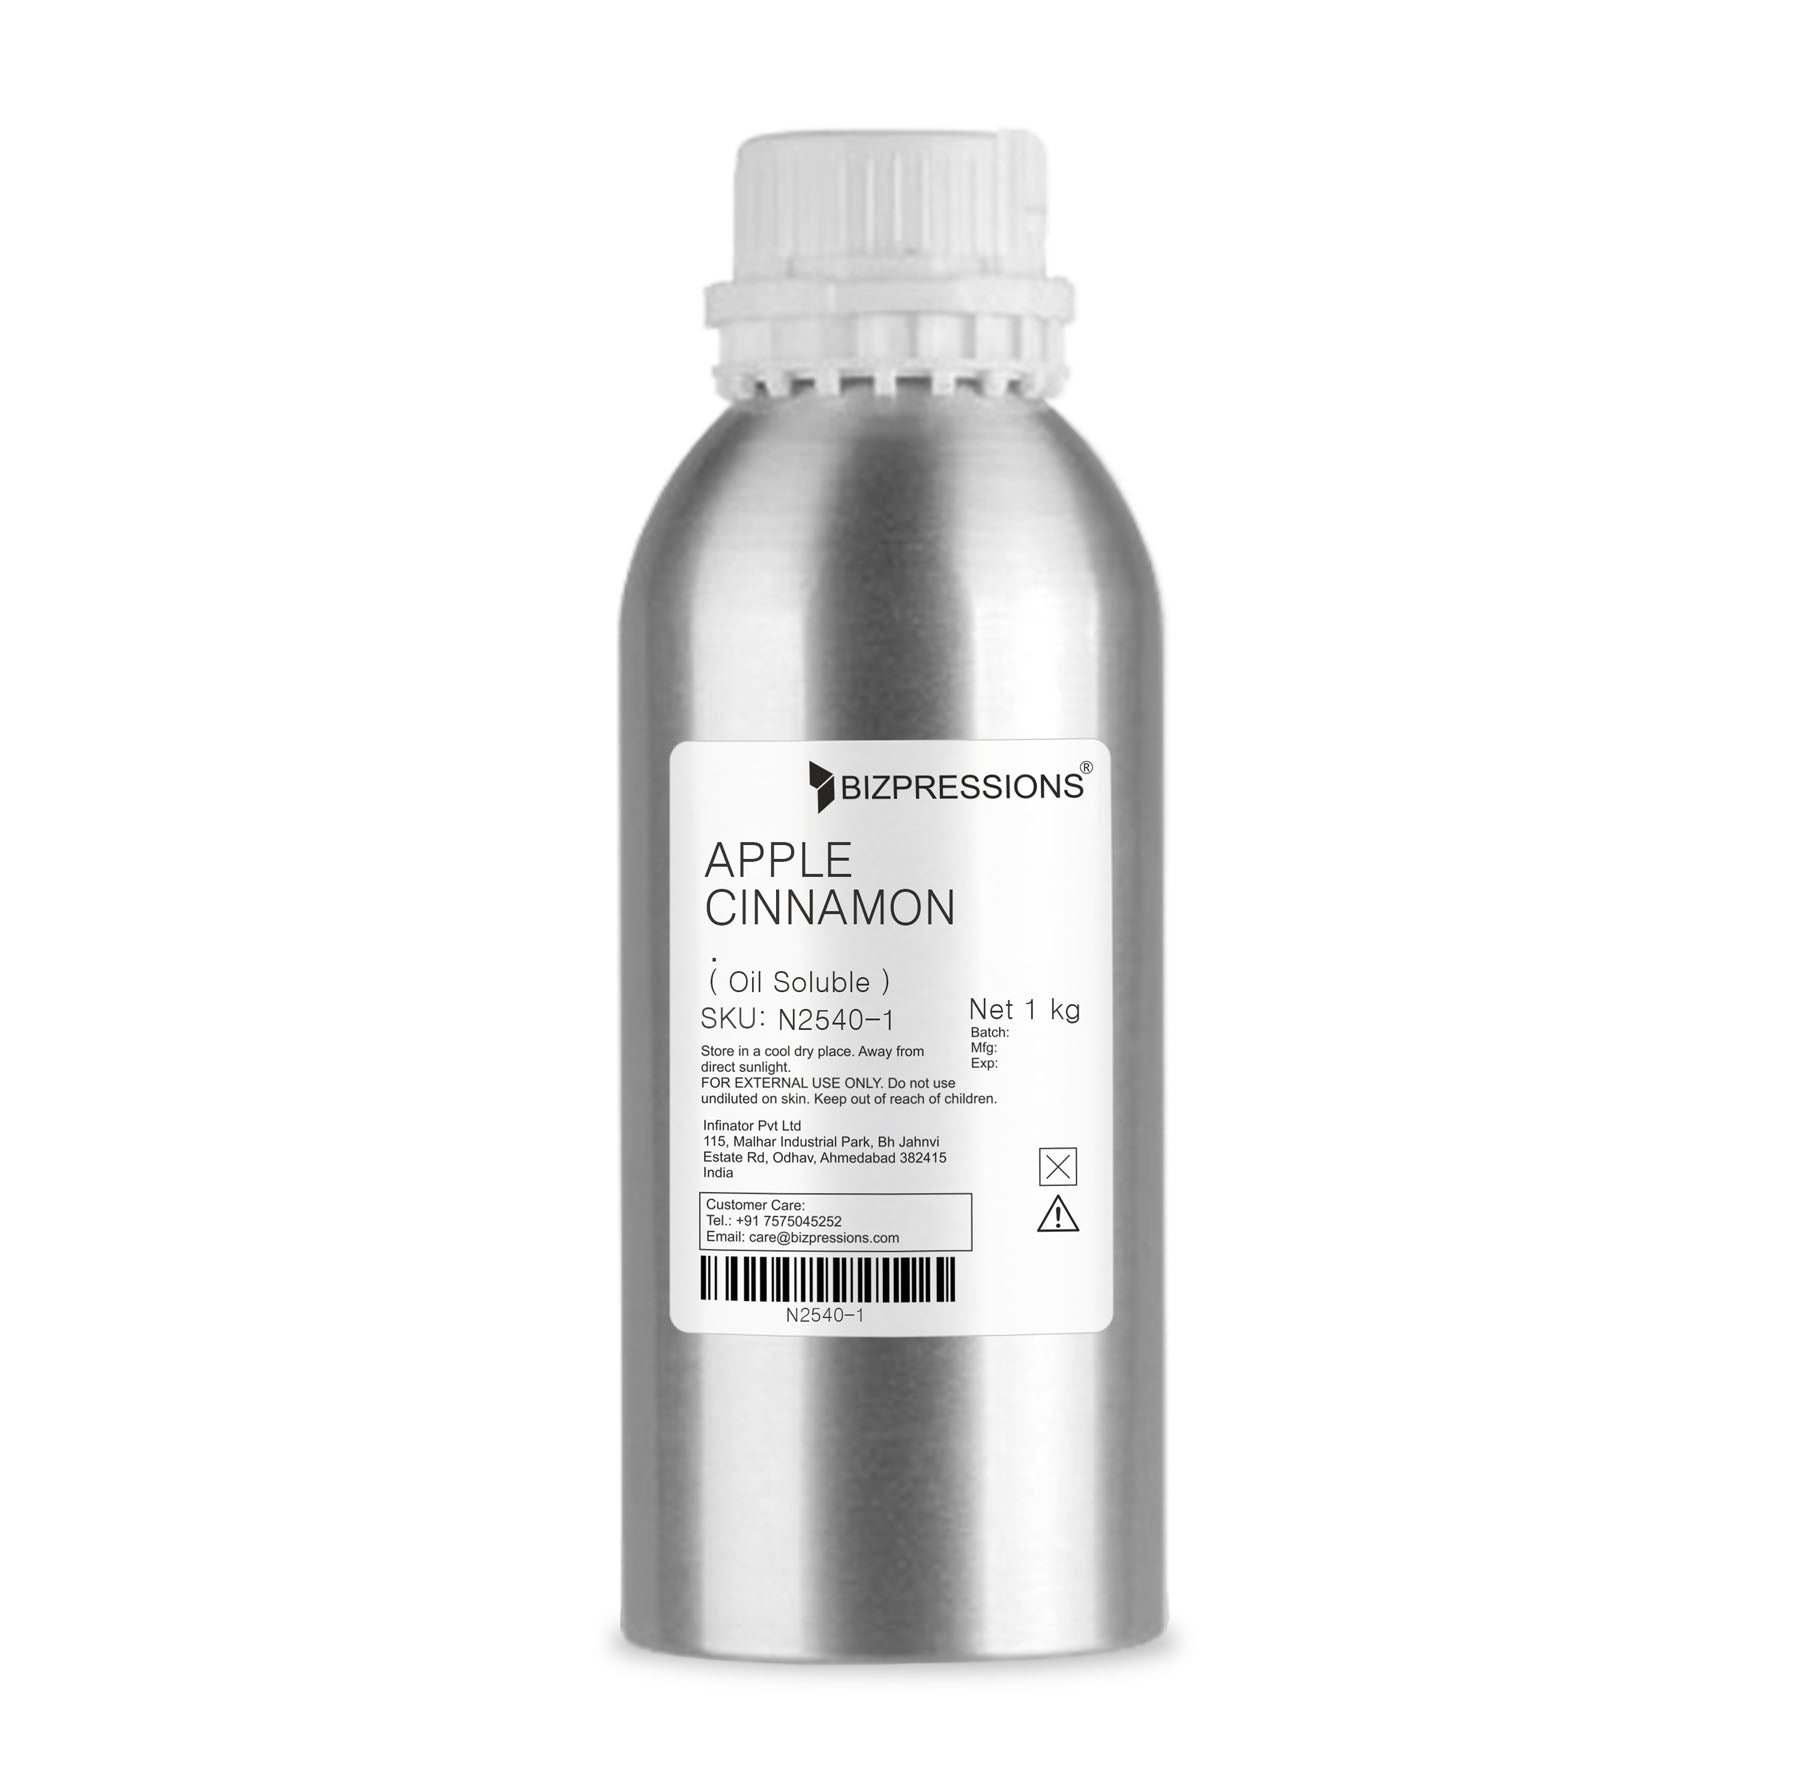 APPLE CINNAMON - Fragrance ( Oil Soluble ) - 1 kg